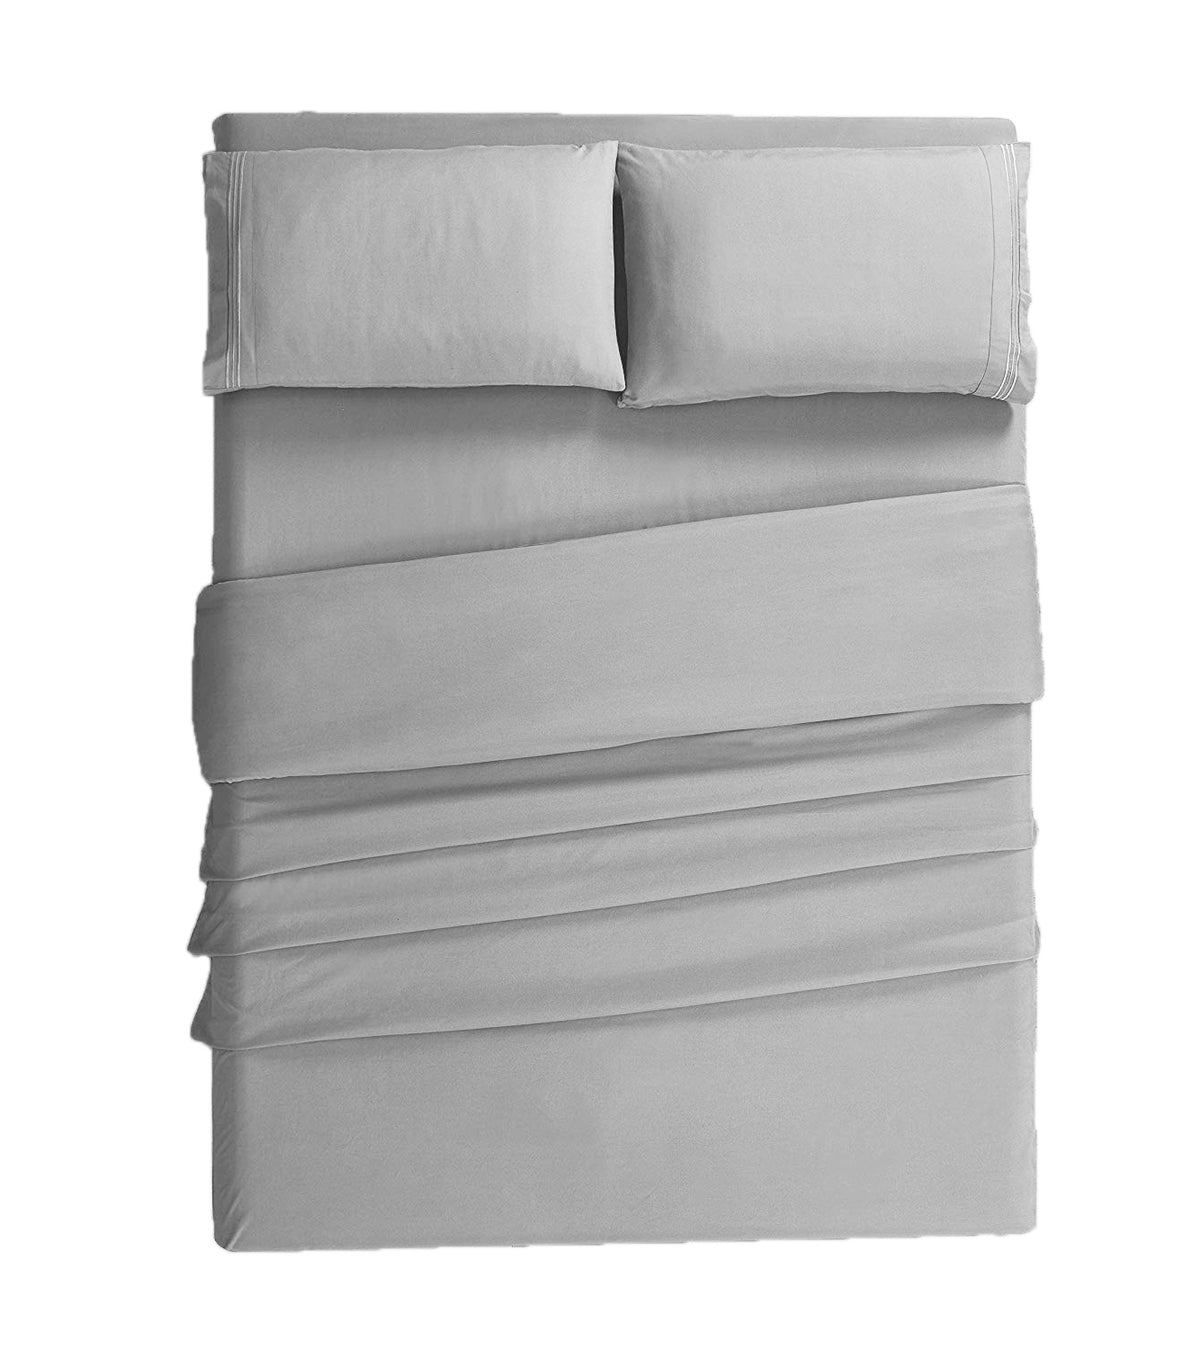 Mali Dreaming Casa Microfiber Bed Sheet 4-Piece Bedding Set - Queen Size, Gray